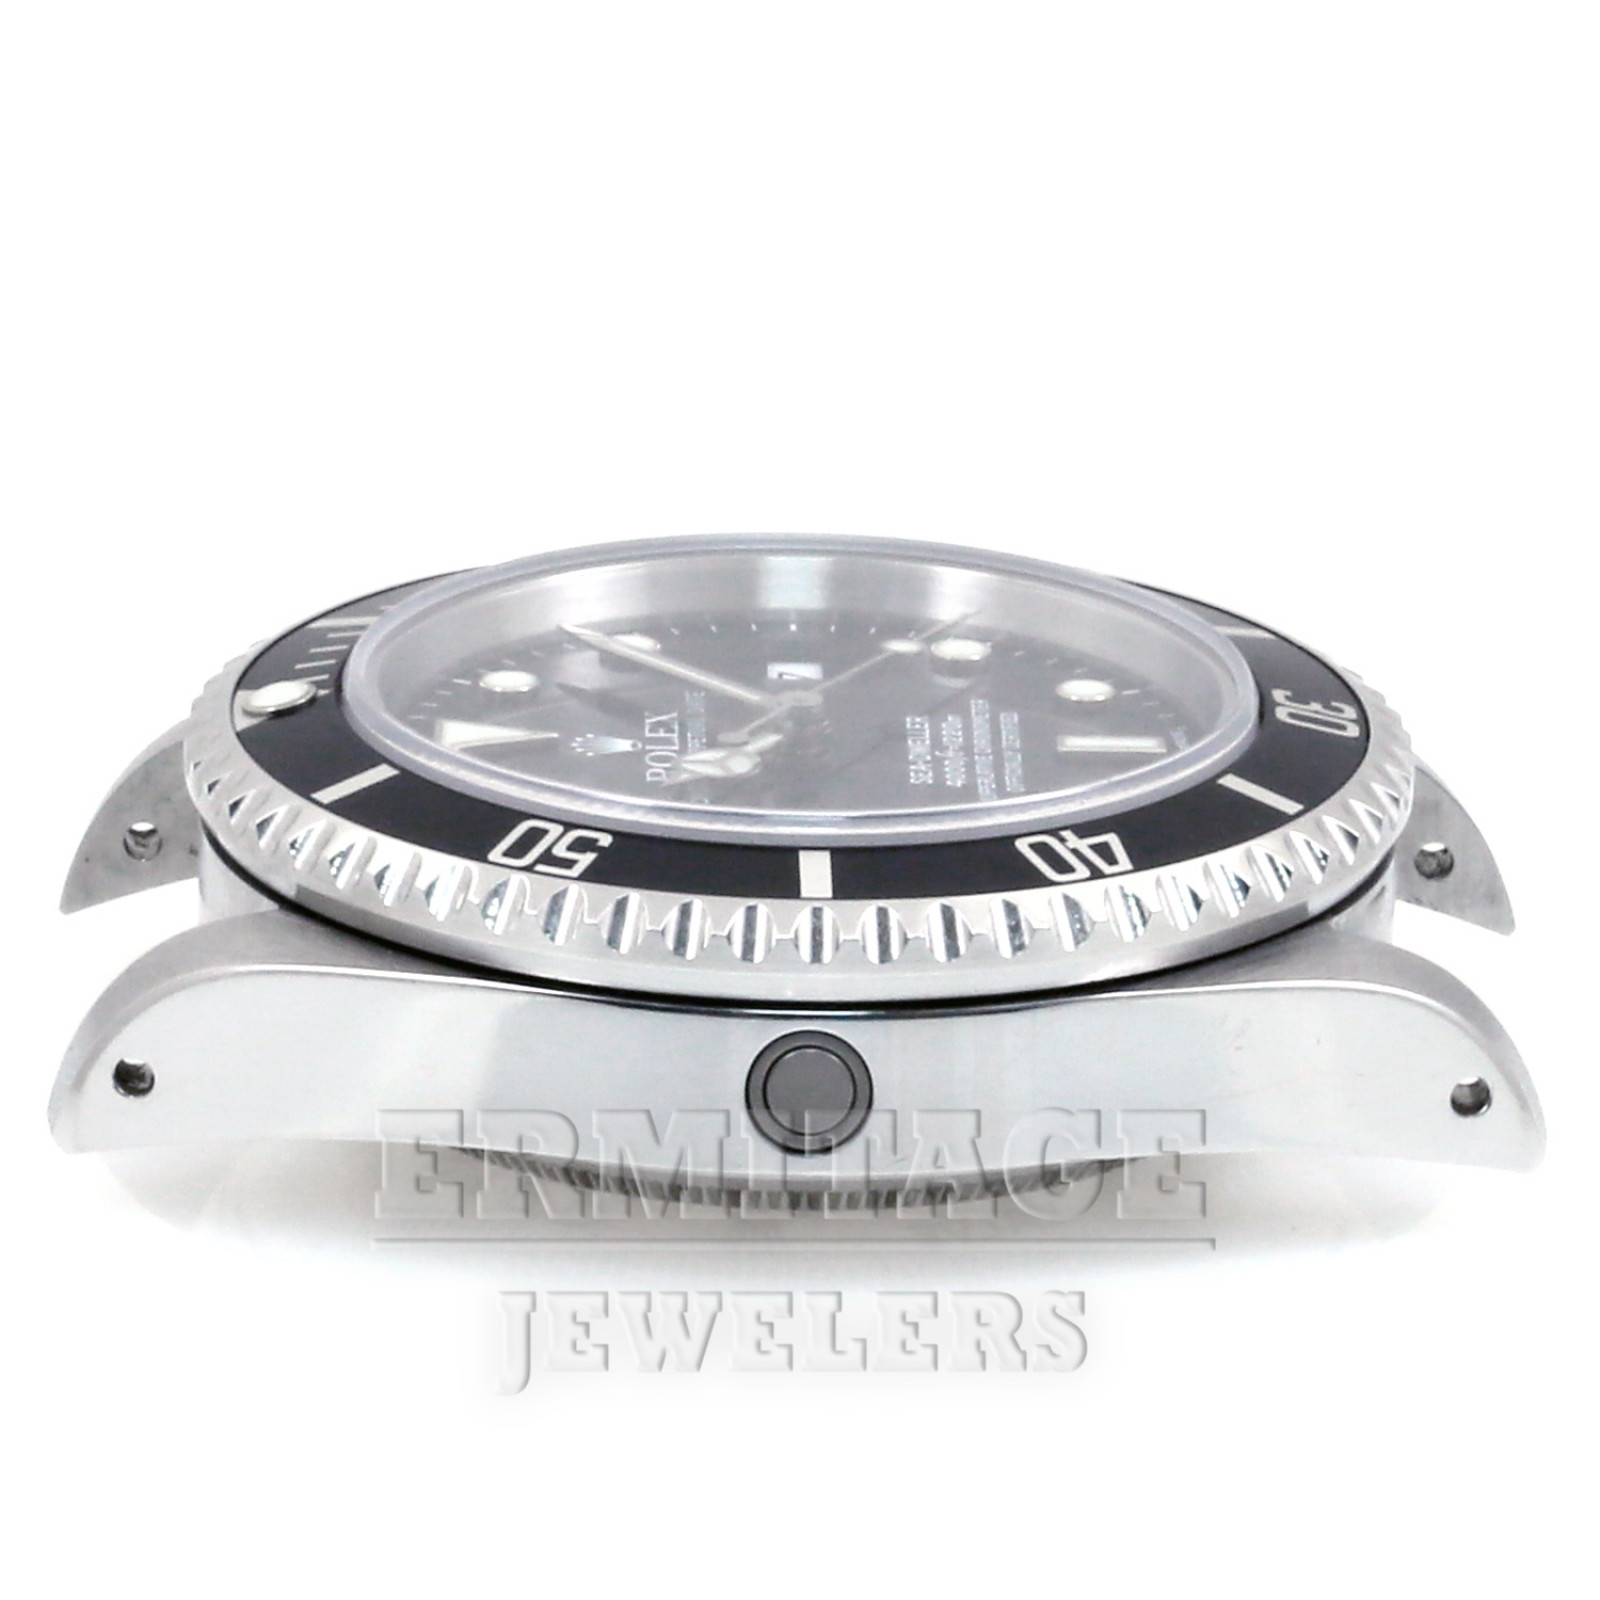 40 mm Rolex Sea-Dweller 16600 Mint Condition